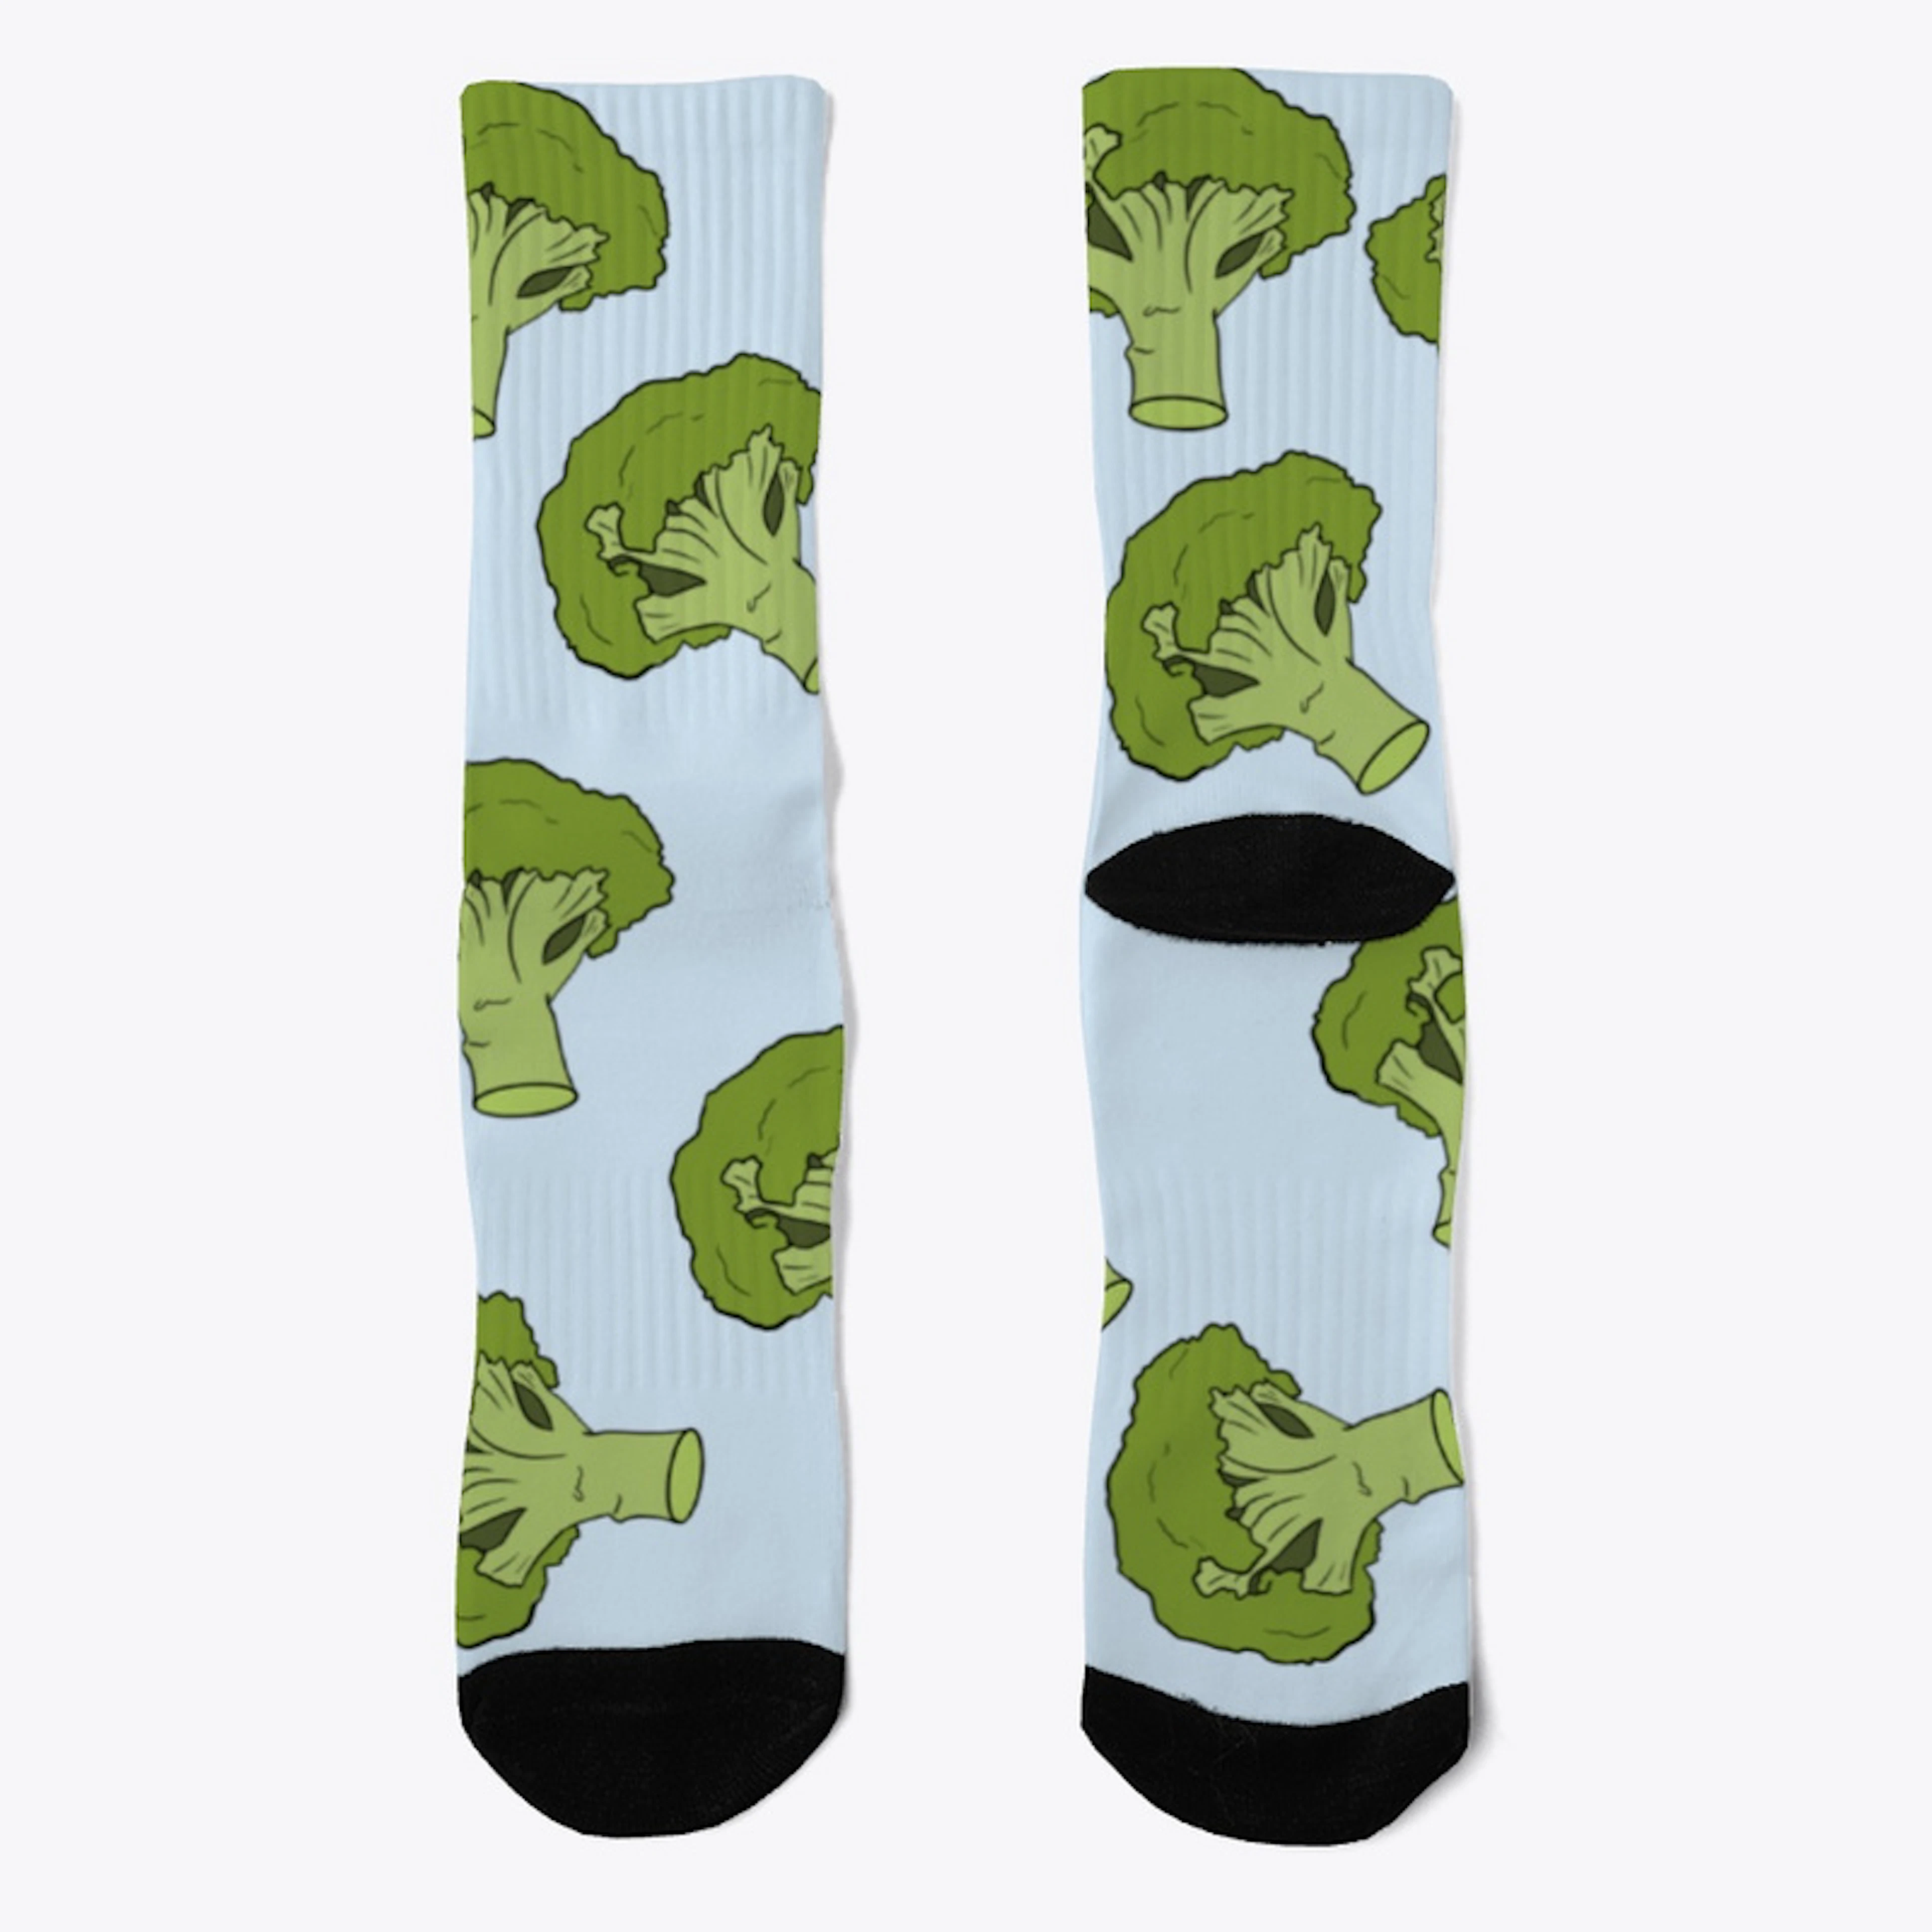 Broccoli socks